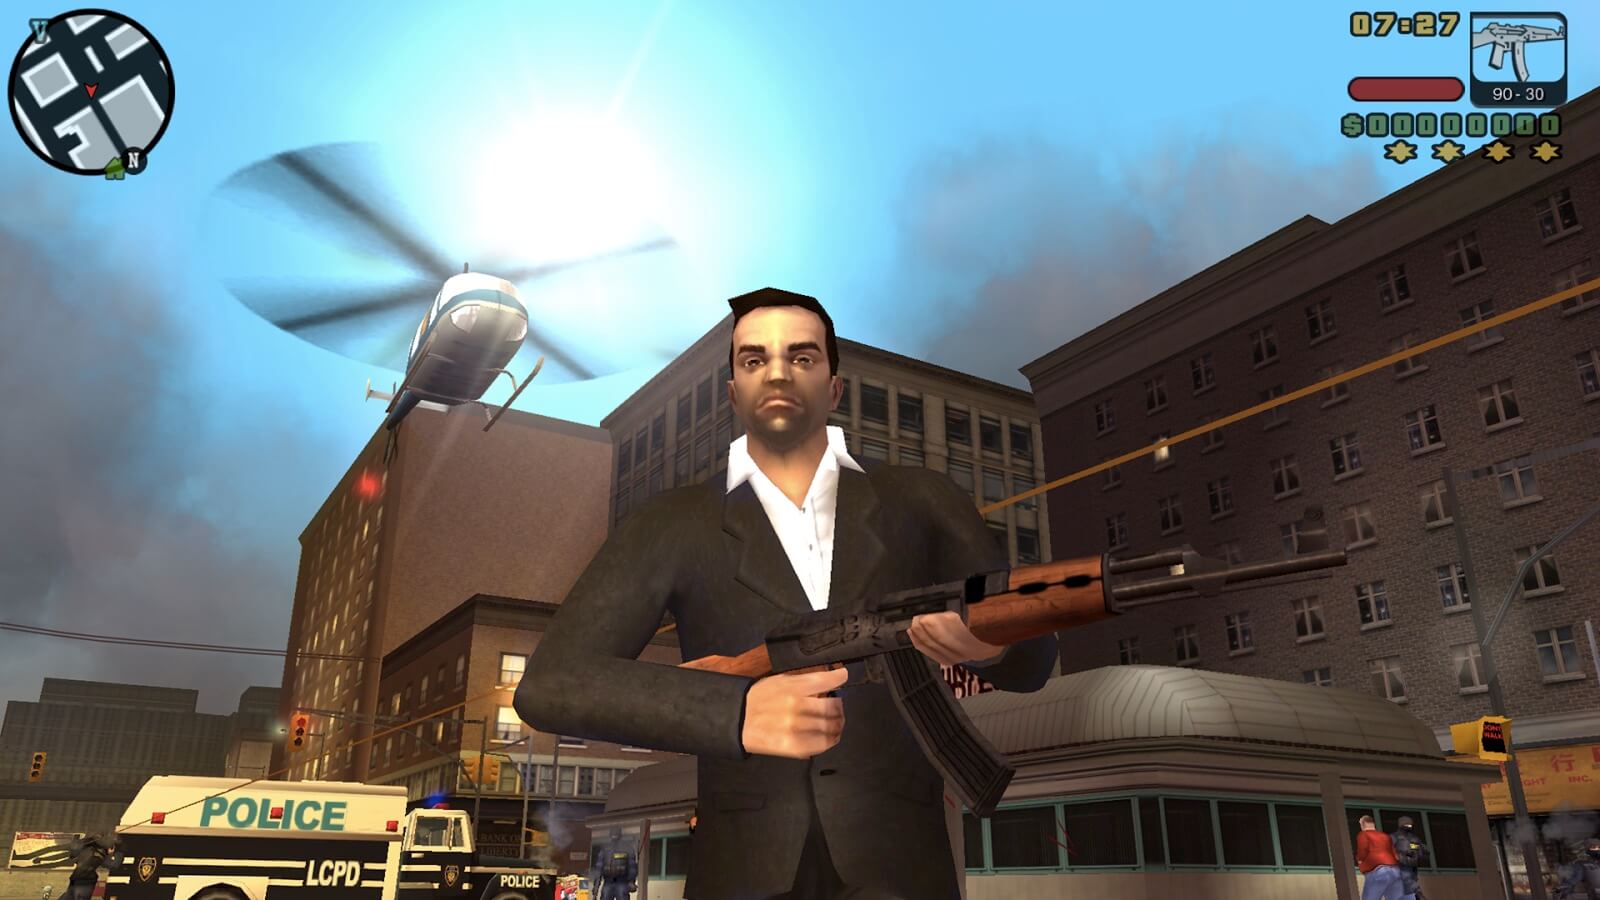 GTA 5 Liberty City Mod - Download